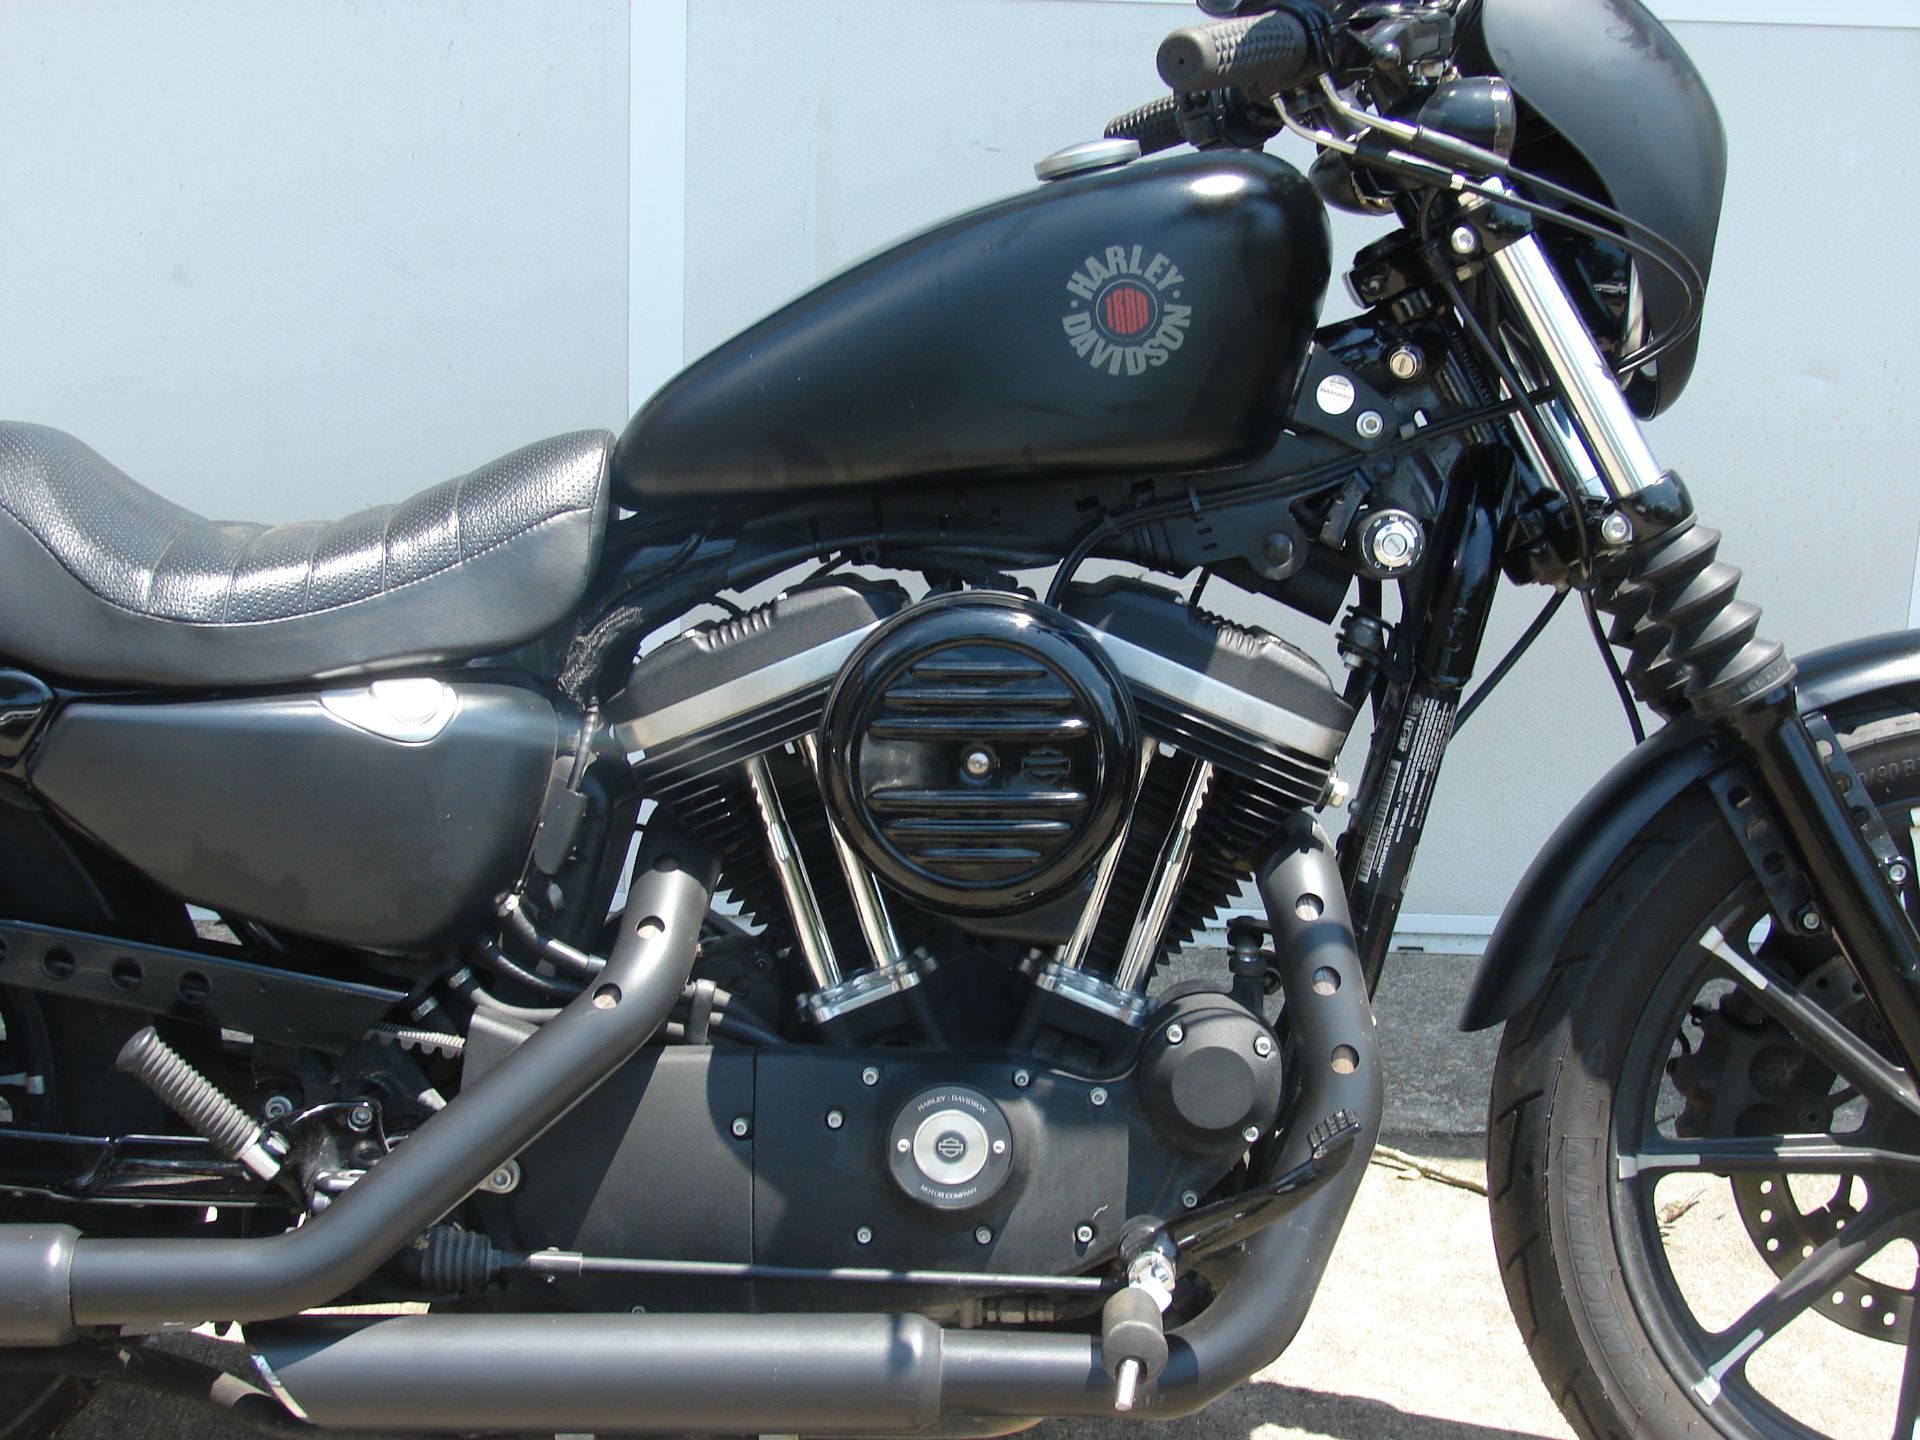 2020 Harley-Davidson XL 883 N Iron Nightster in Williamstown, New Jersey - Photo 2